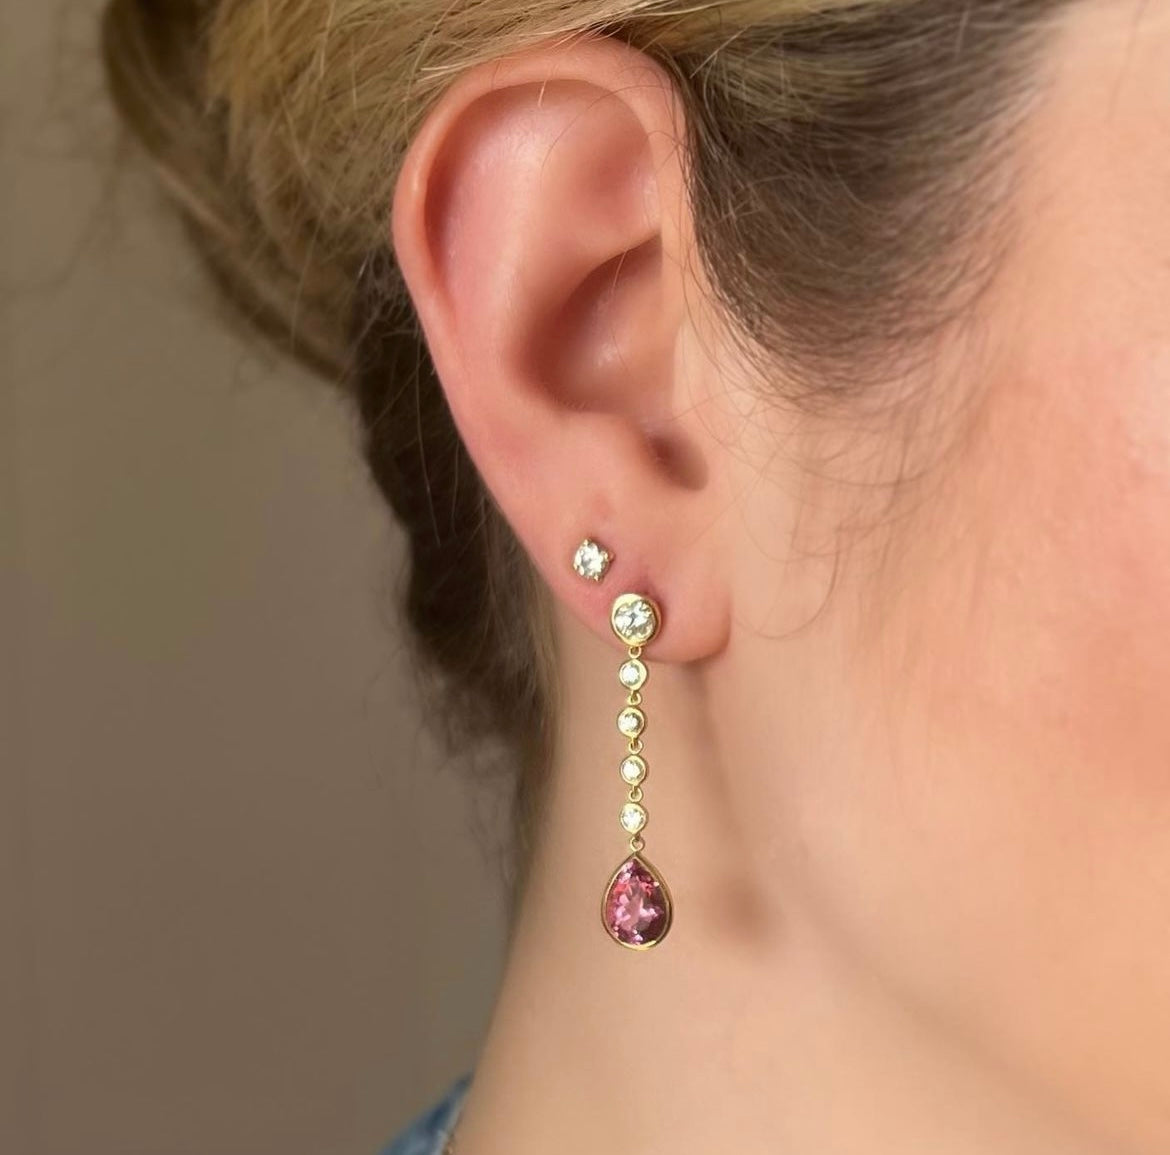 Whirl Cascading Diamond and Pink Tourmaline Earrings